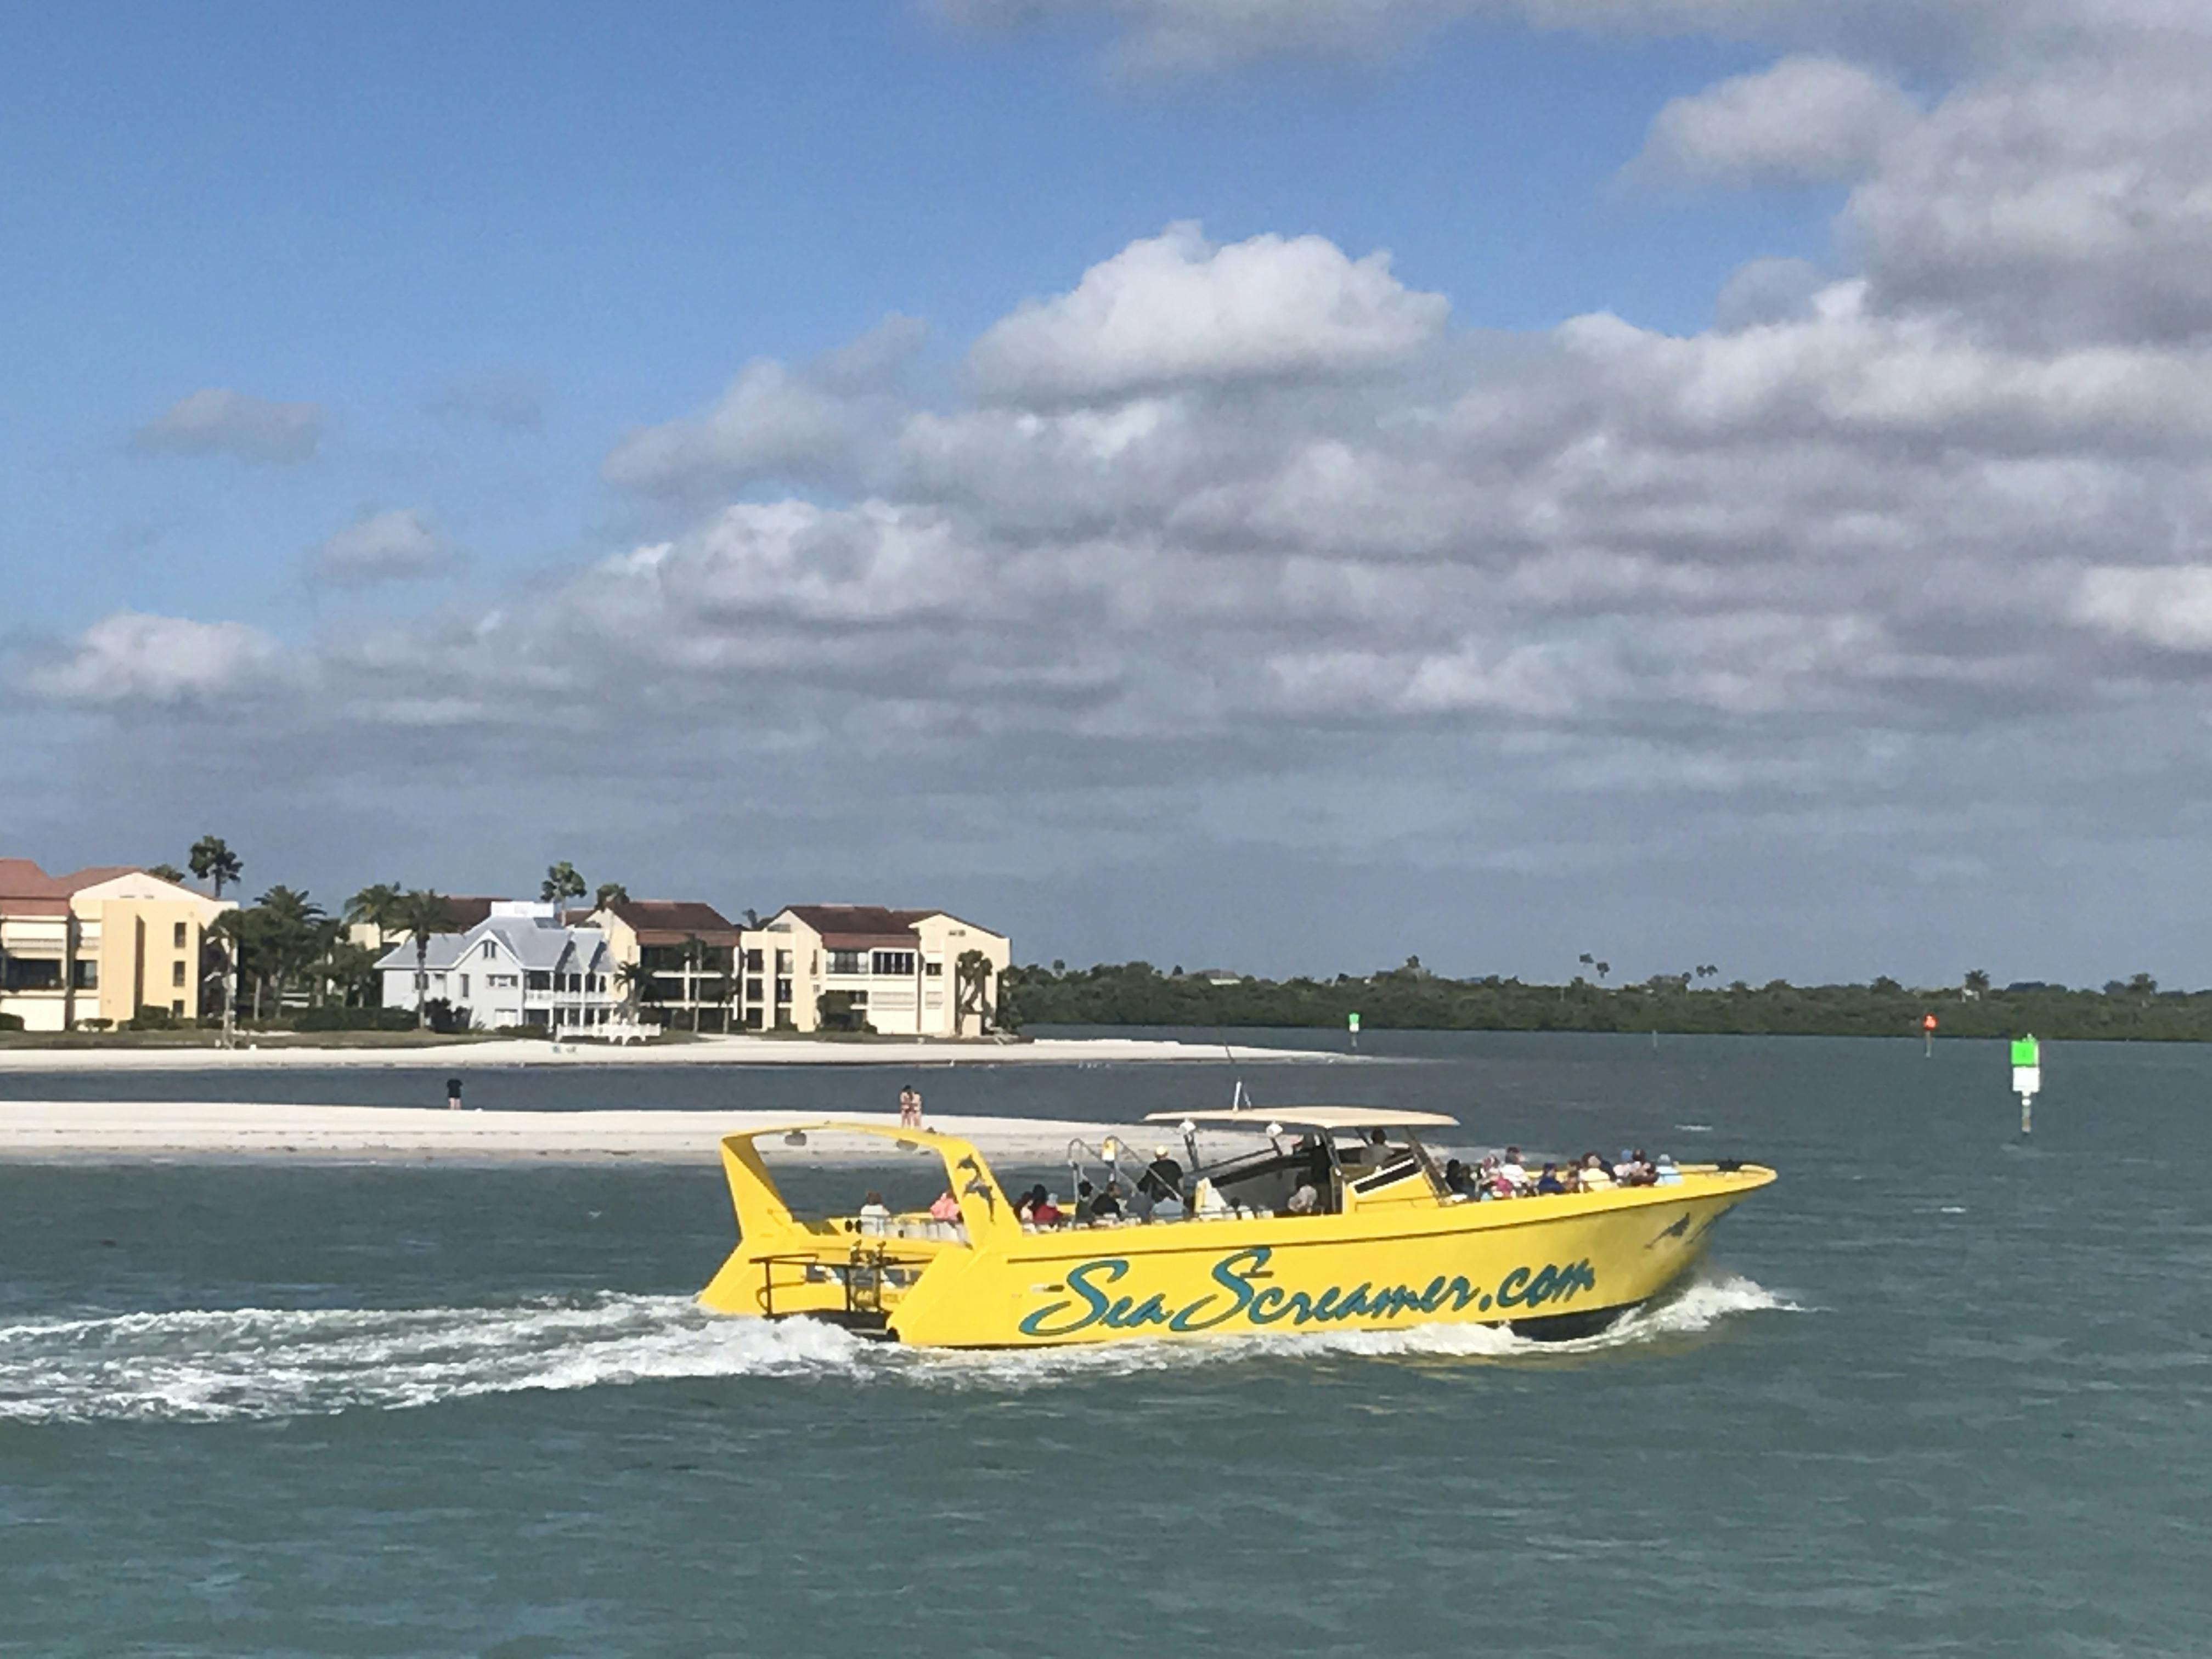 Sea Screamer speedboat ride at Clearwater Beach. Musement